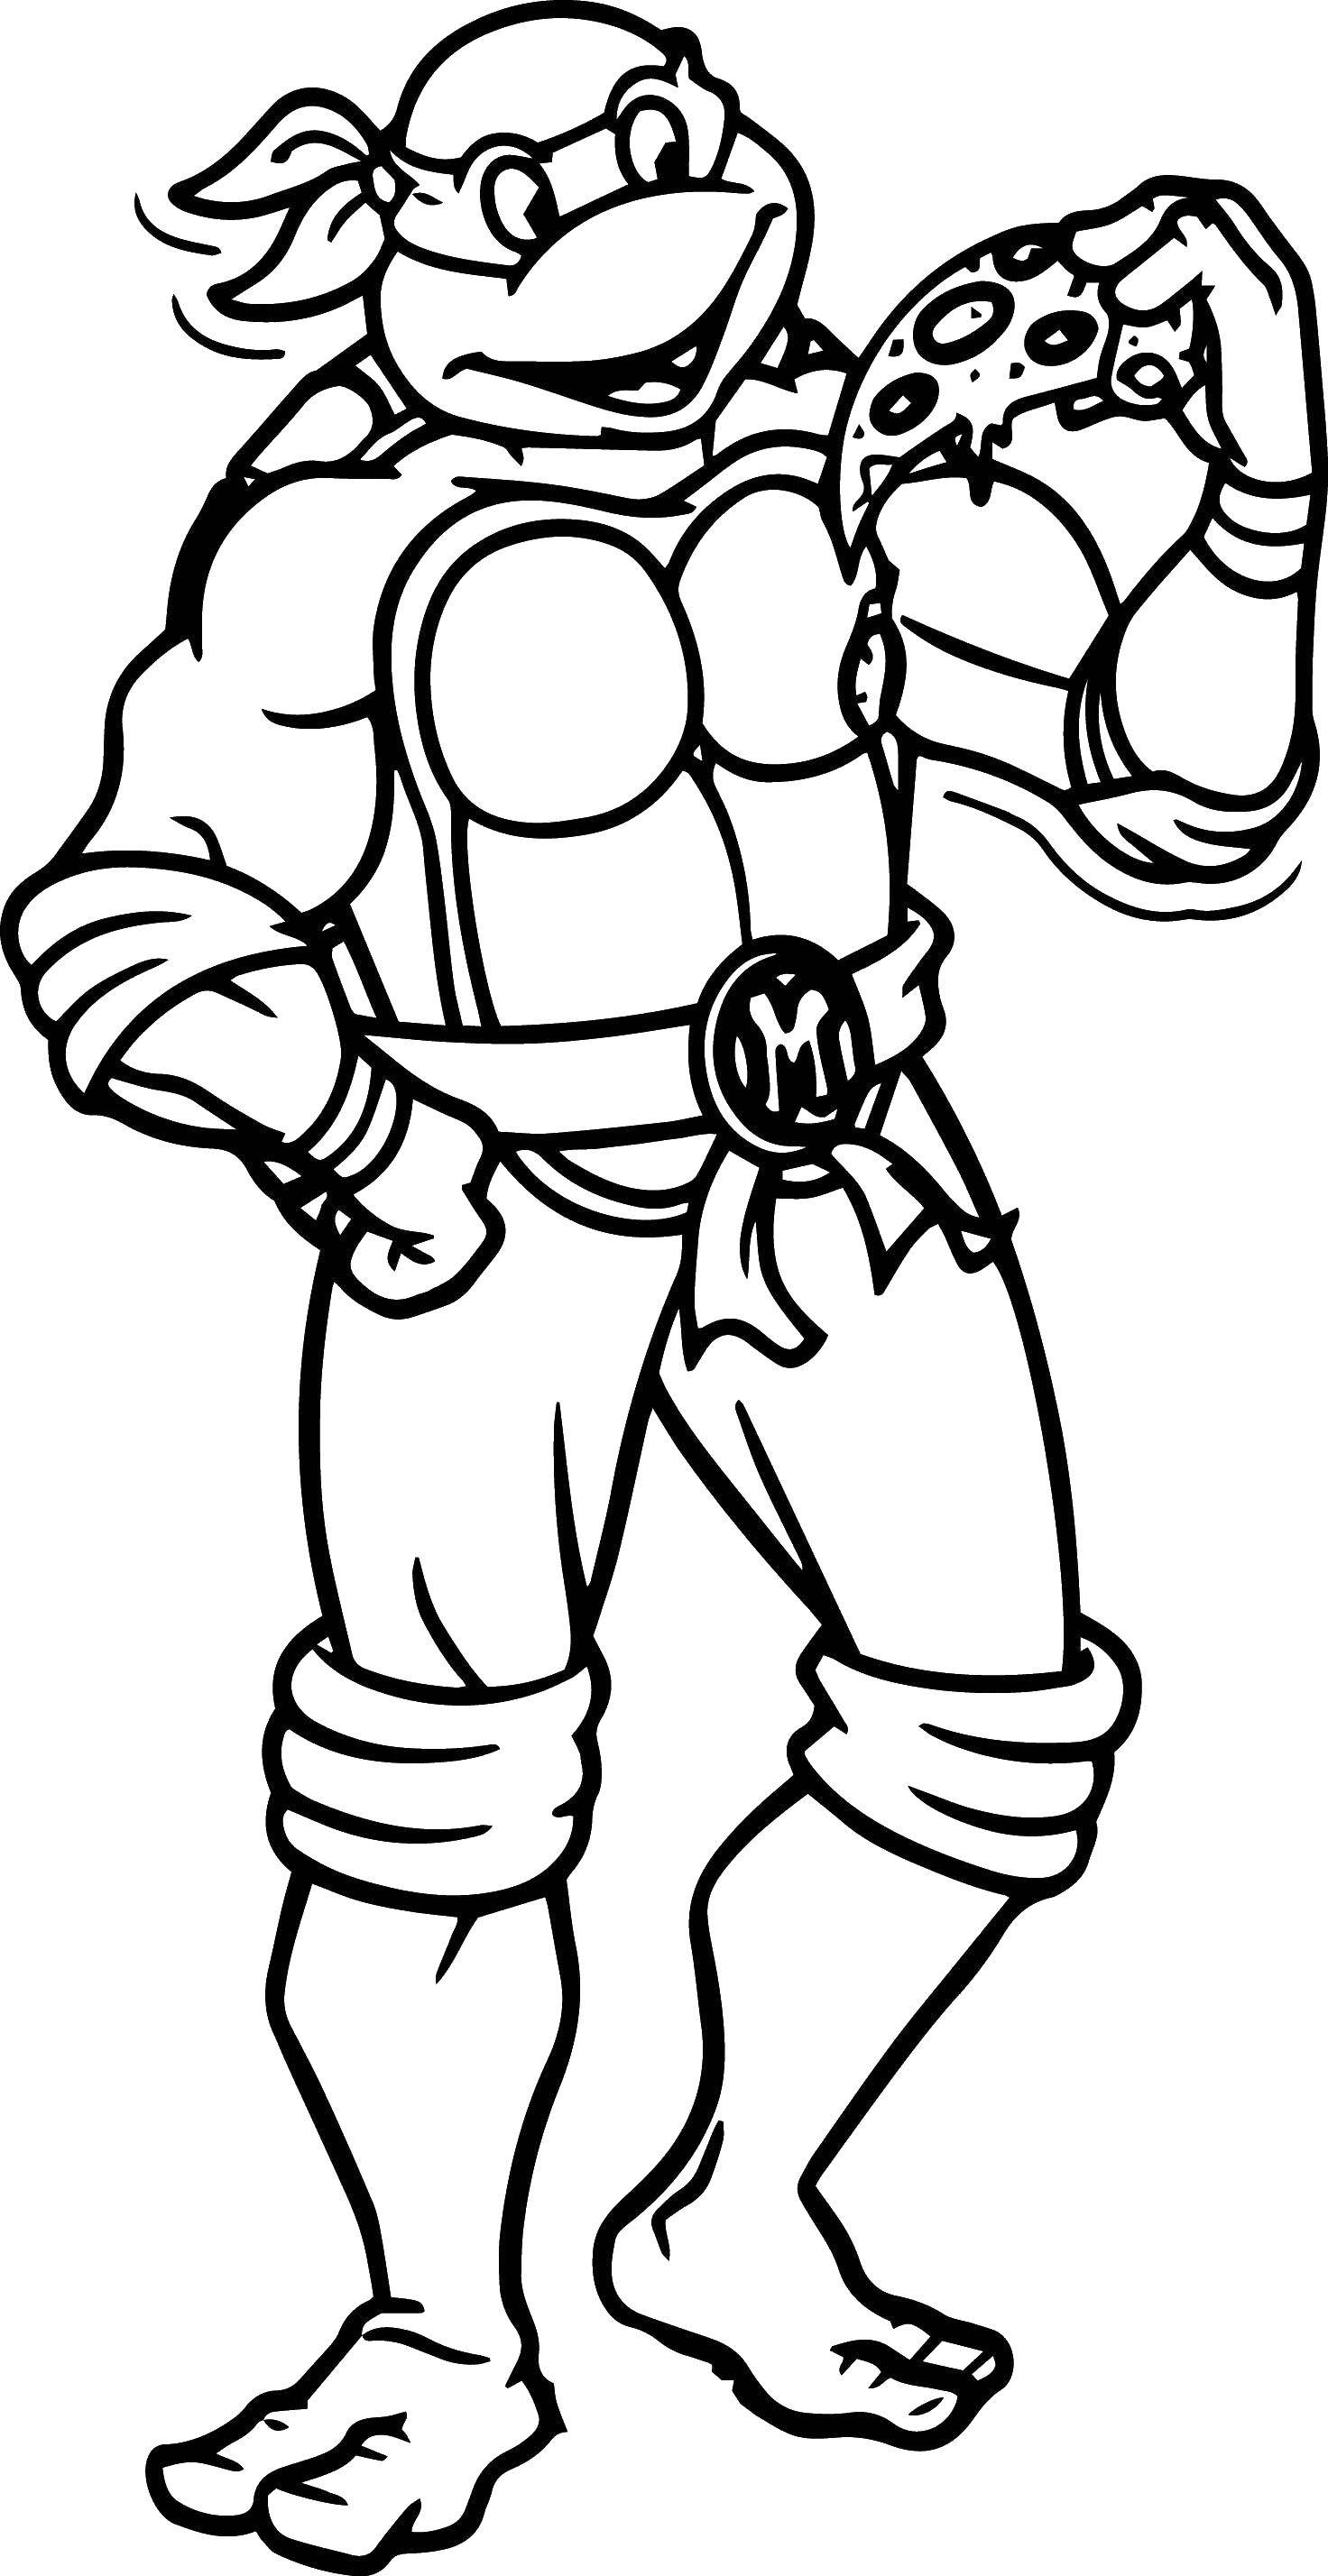 Coloring Michelangelo. Category teenage mutant ninja turtles. Tags:  turtle, ninja, Michelangelo.